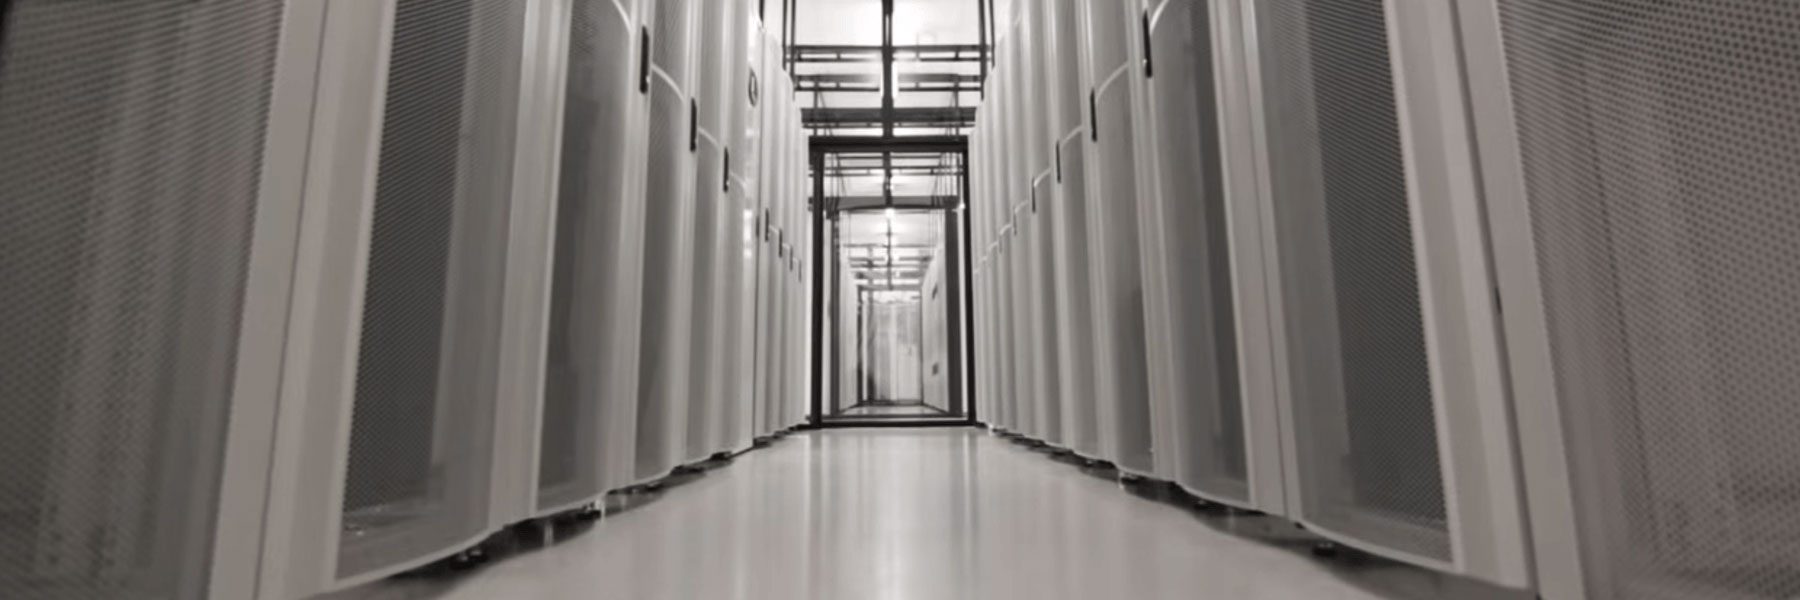 LightEdge server hallway